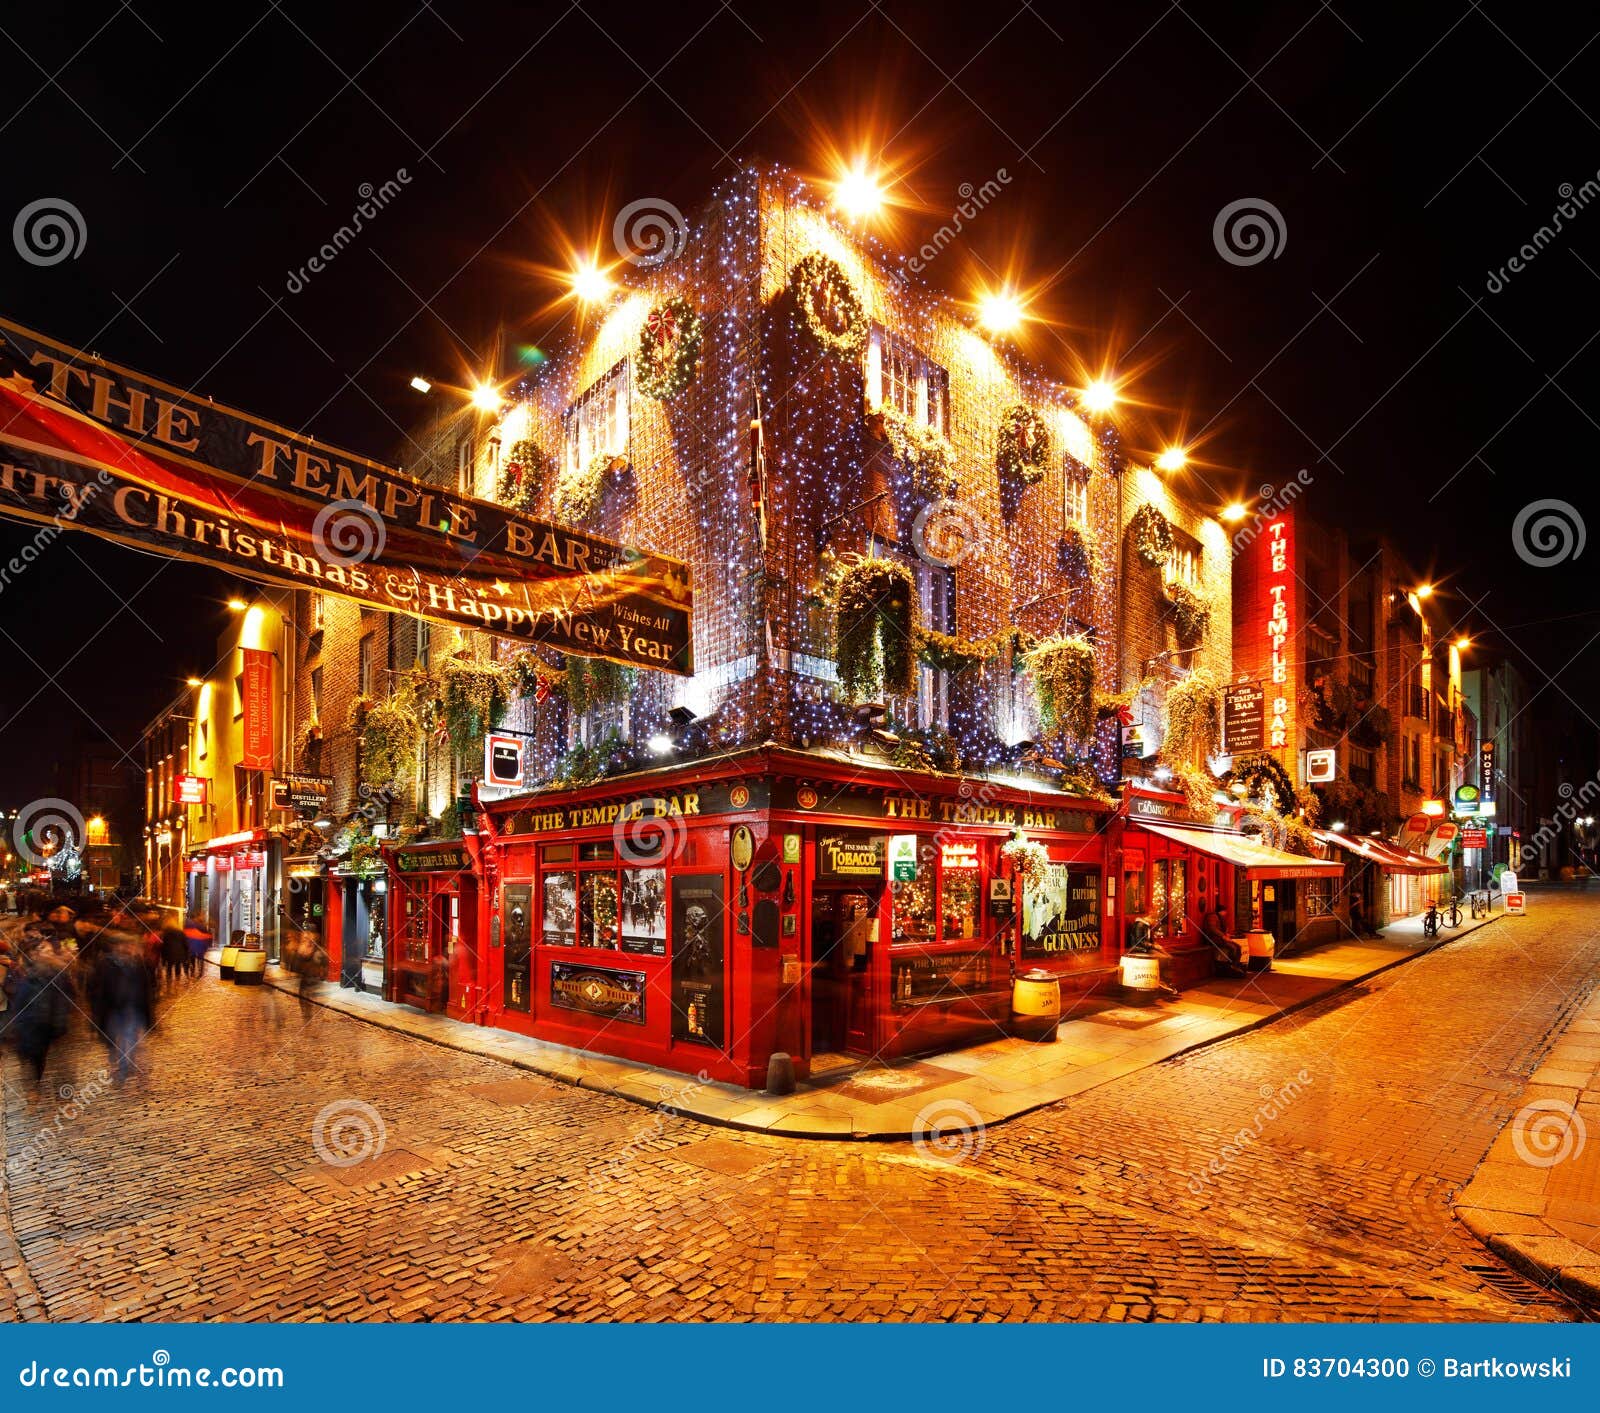 A Busy Nightlife Of The Temple  Bar  Area  Of Dublin  Ireland  